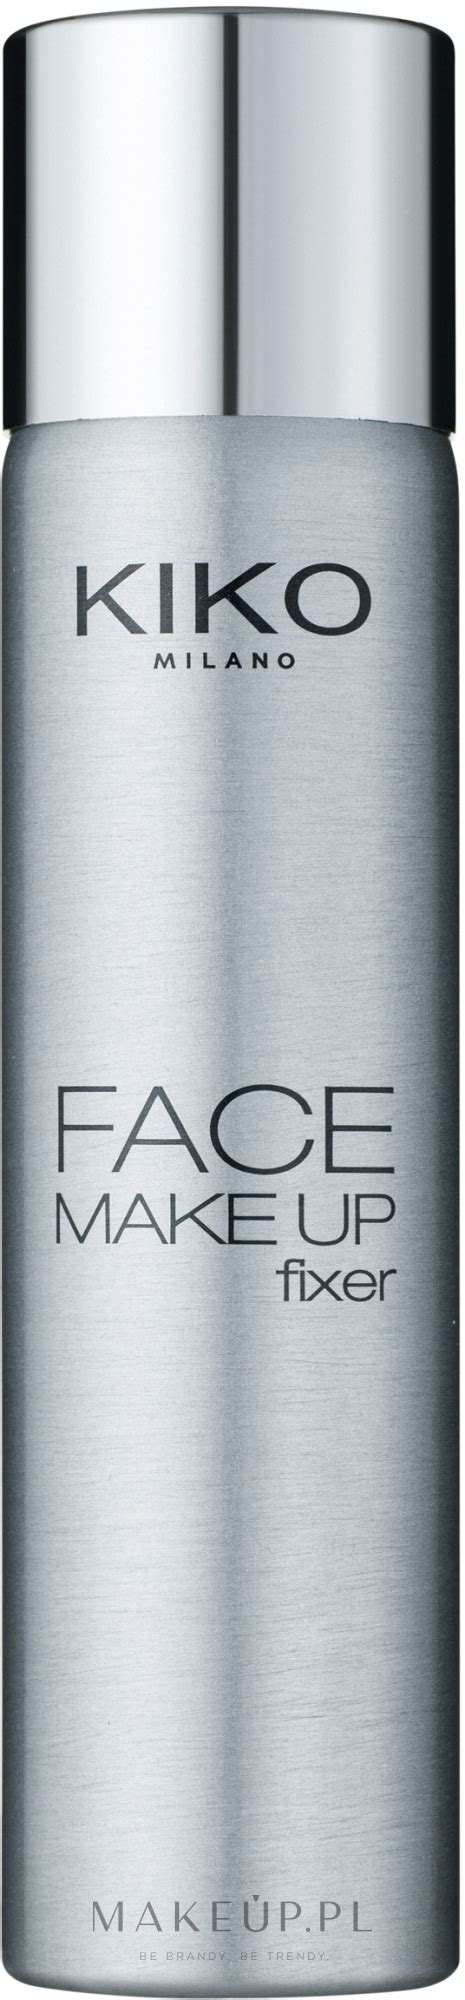 Spray utrwalający makijaż - Kiko Milano Face Make Up Fixer | Makeup.pl